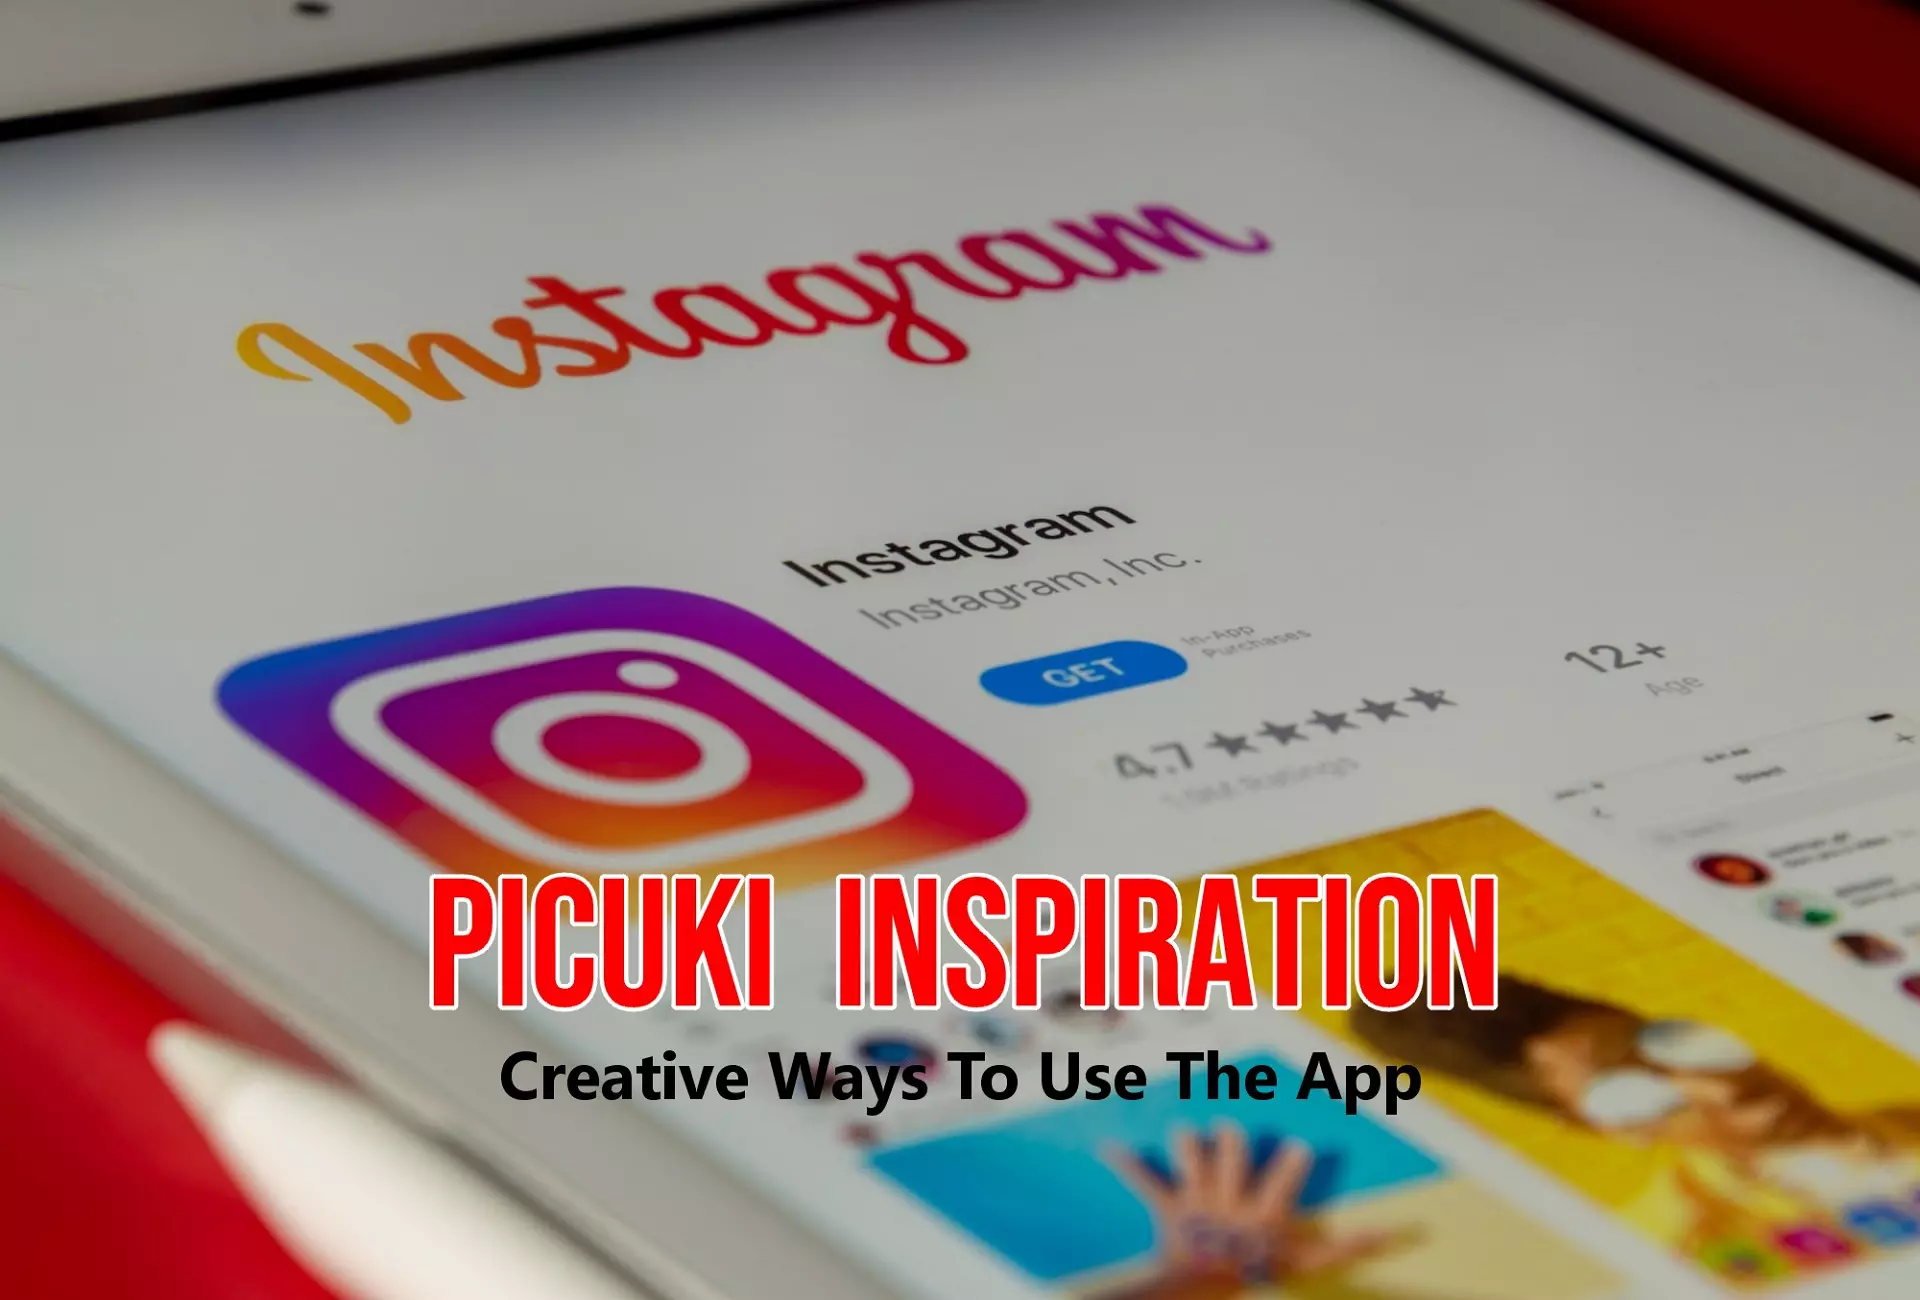 Picuki Inspiration: Creative Ways to Use the App